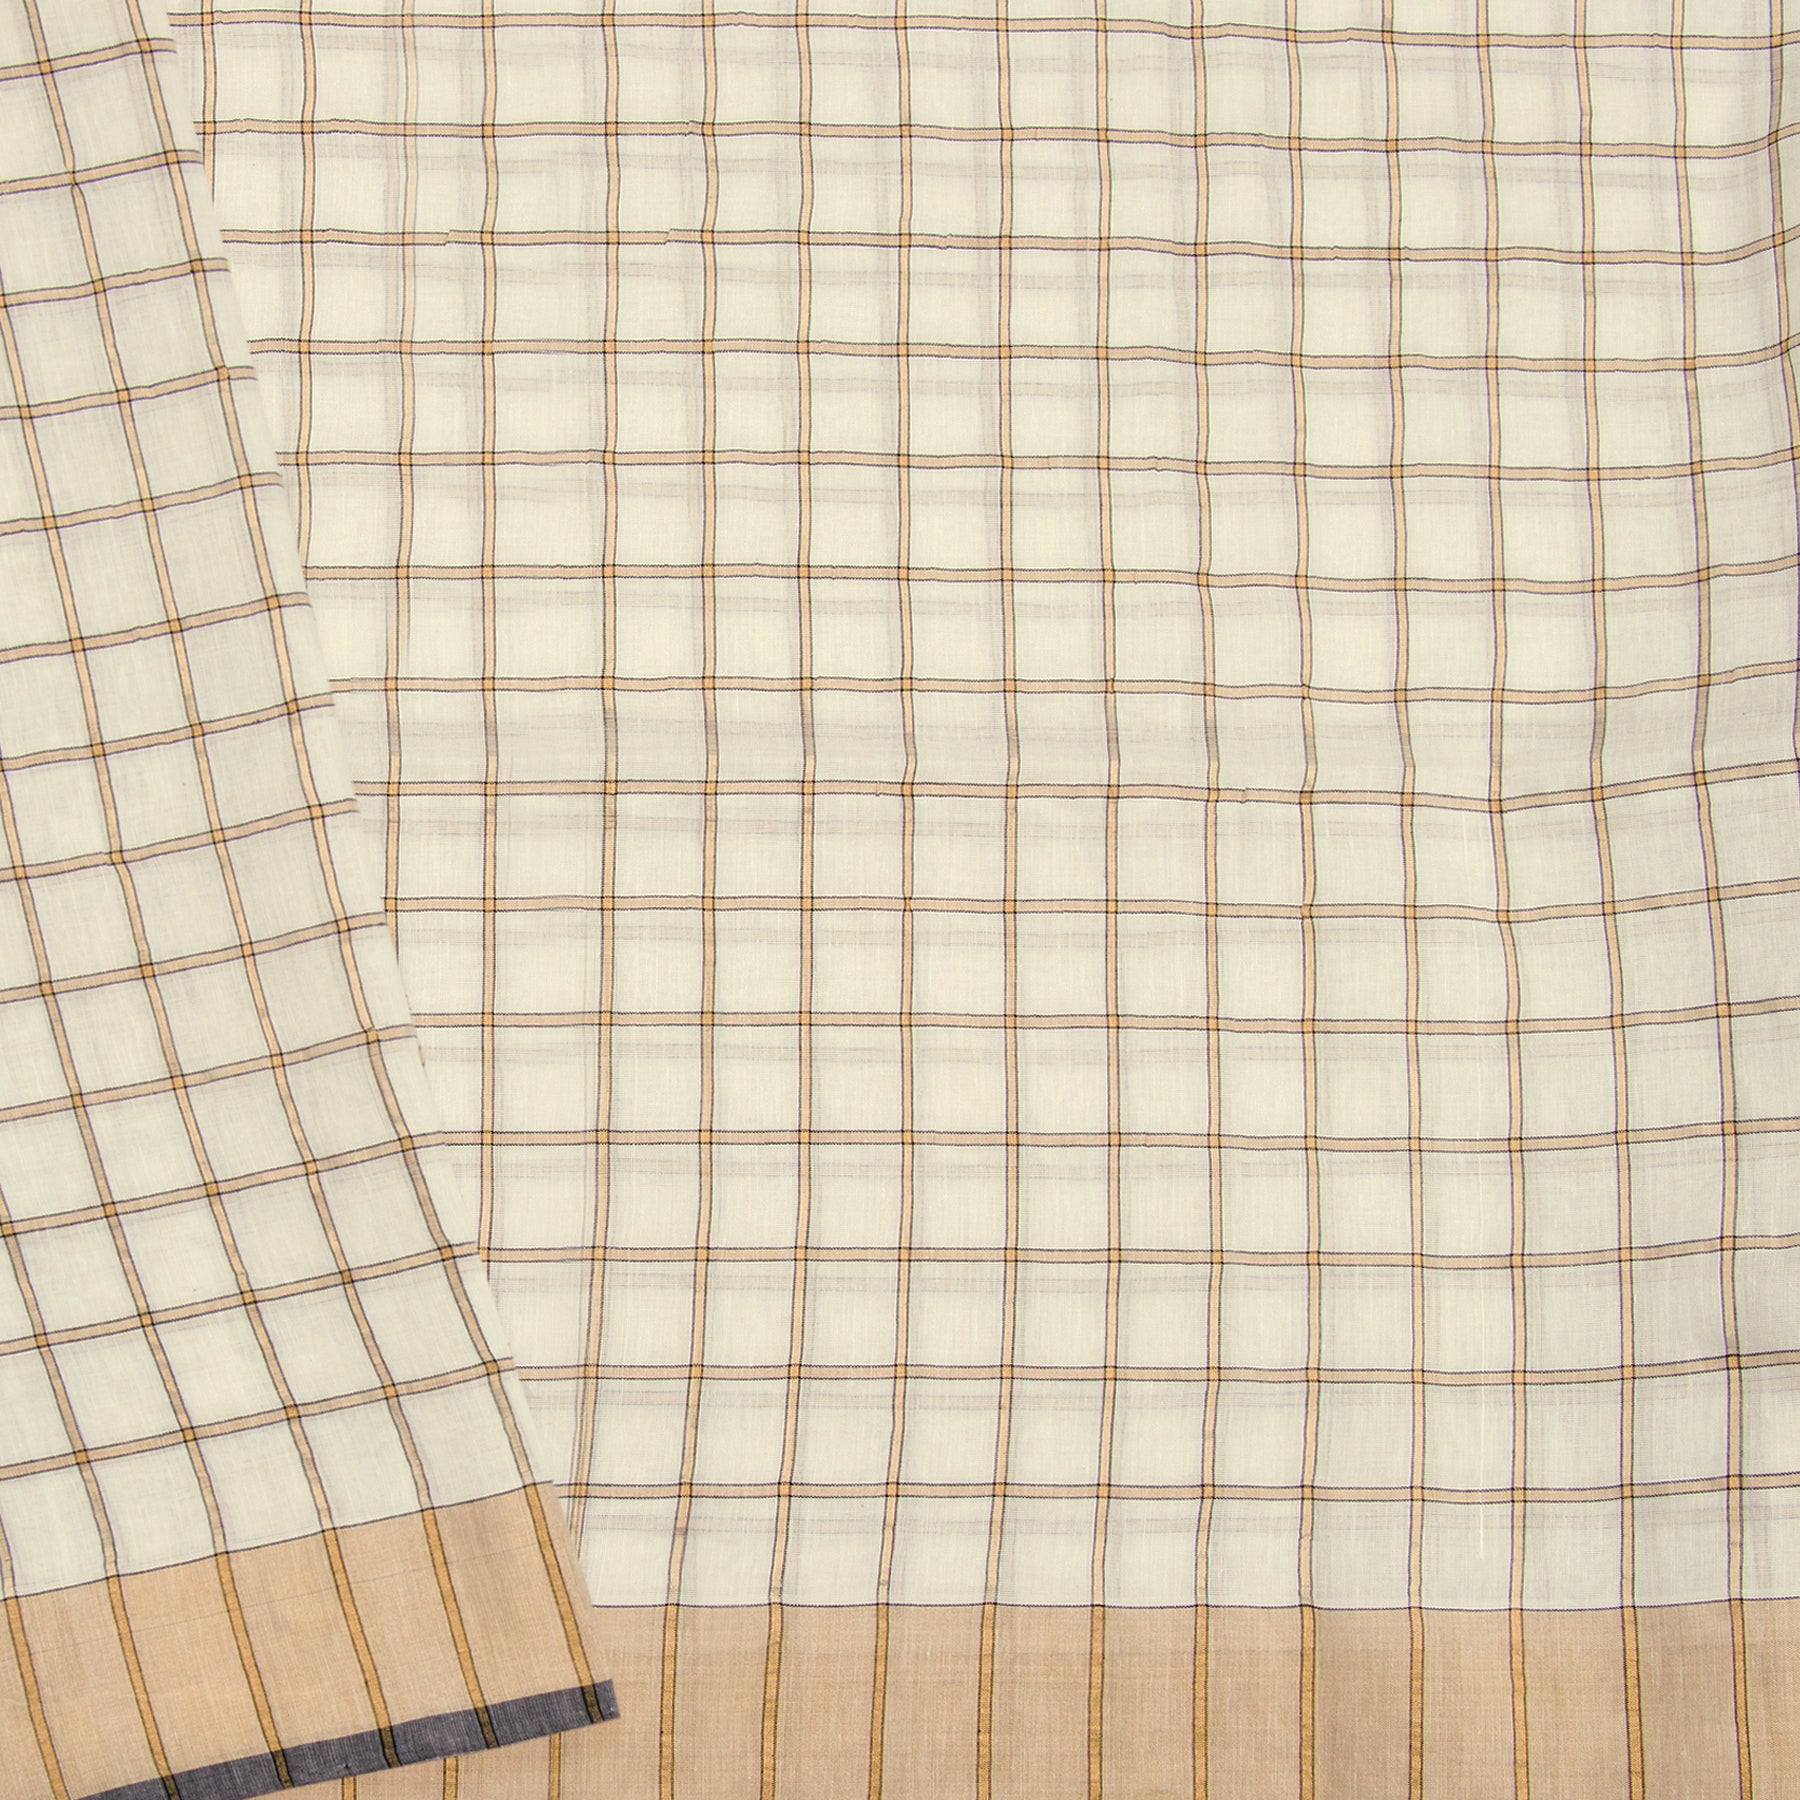 Pradeep Pillai Linen/Cotton Sari 22-008-HS004-00837 - Blouse View